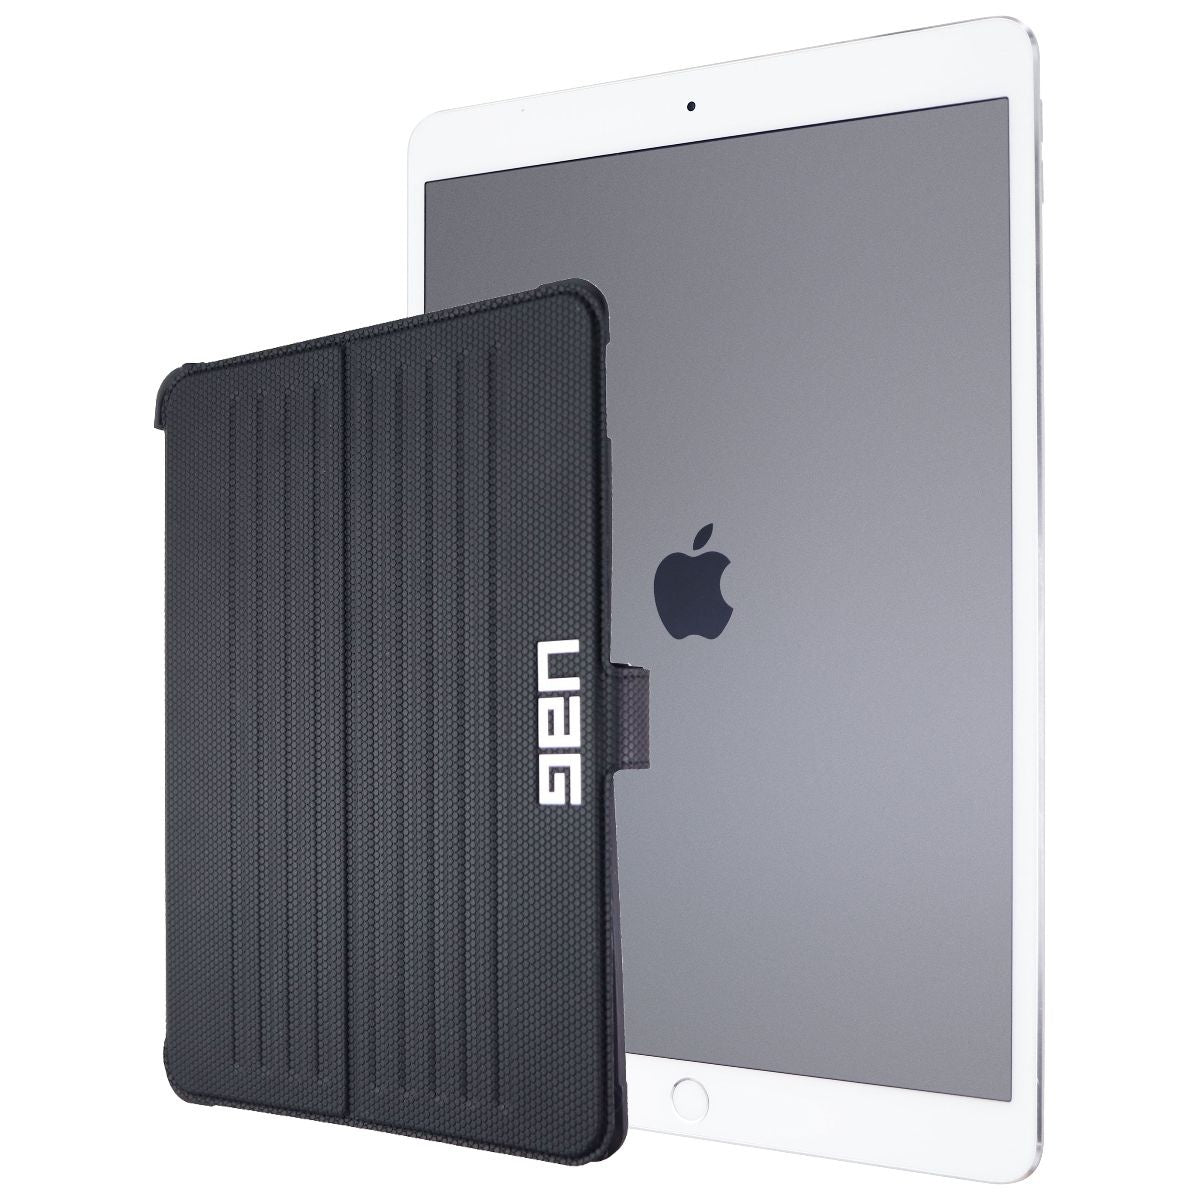 Apple iPad Pro 10.5-in (A1701) Wi-Fi - 256GB / Silver + FREE CASE BUND